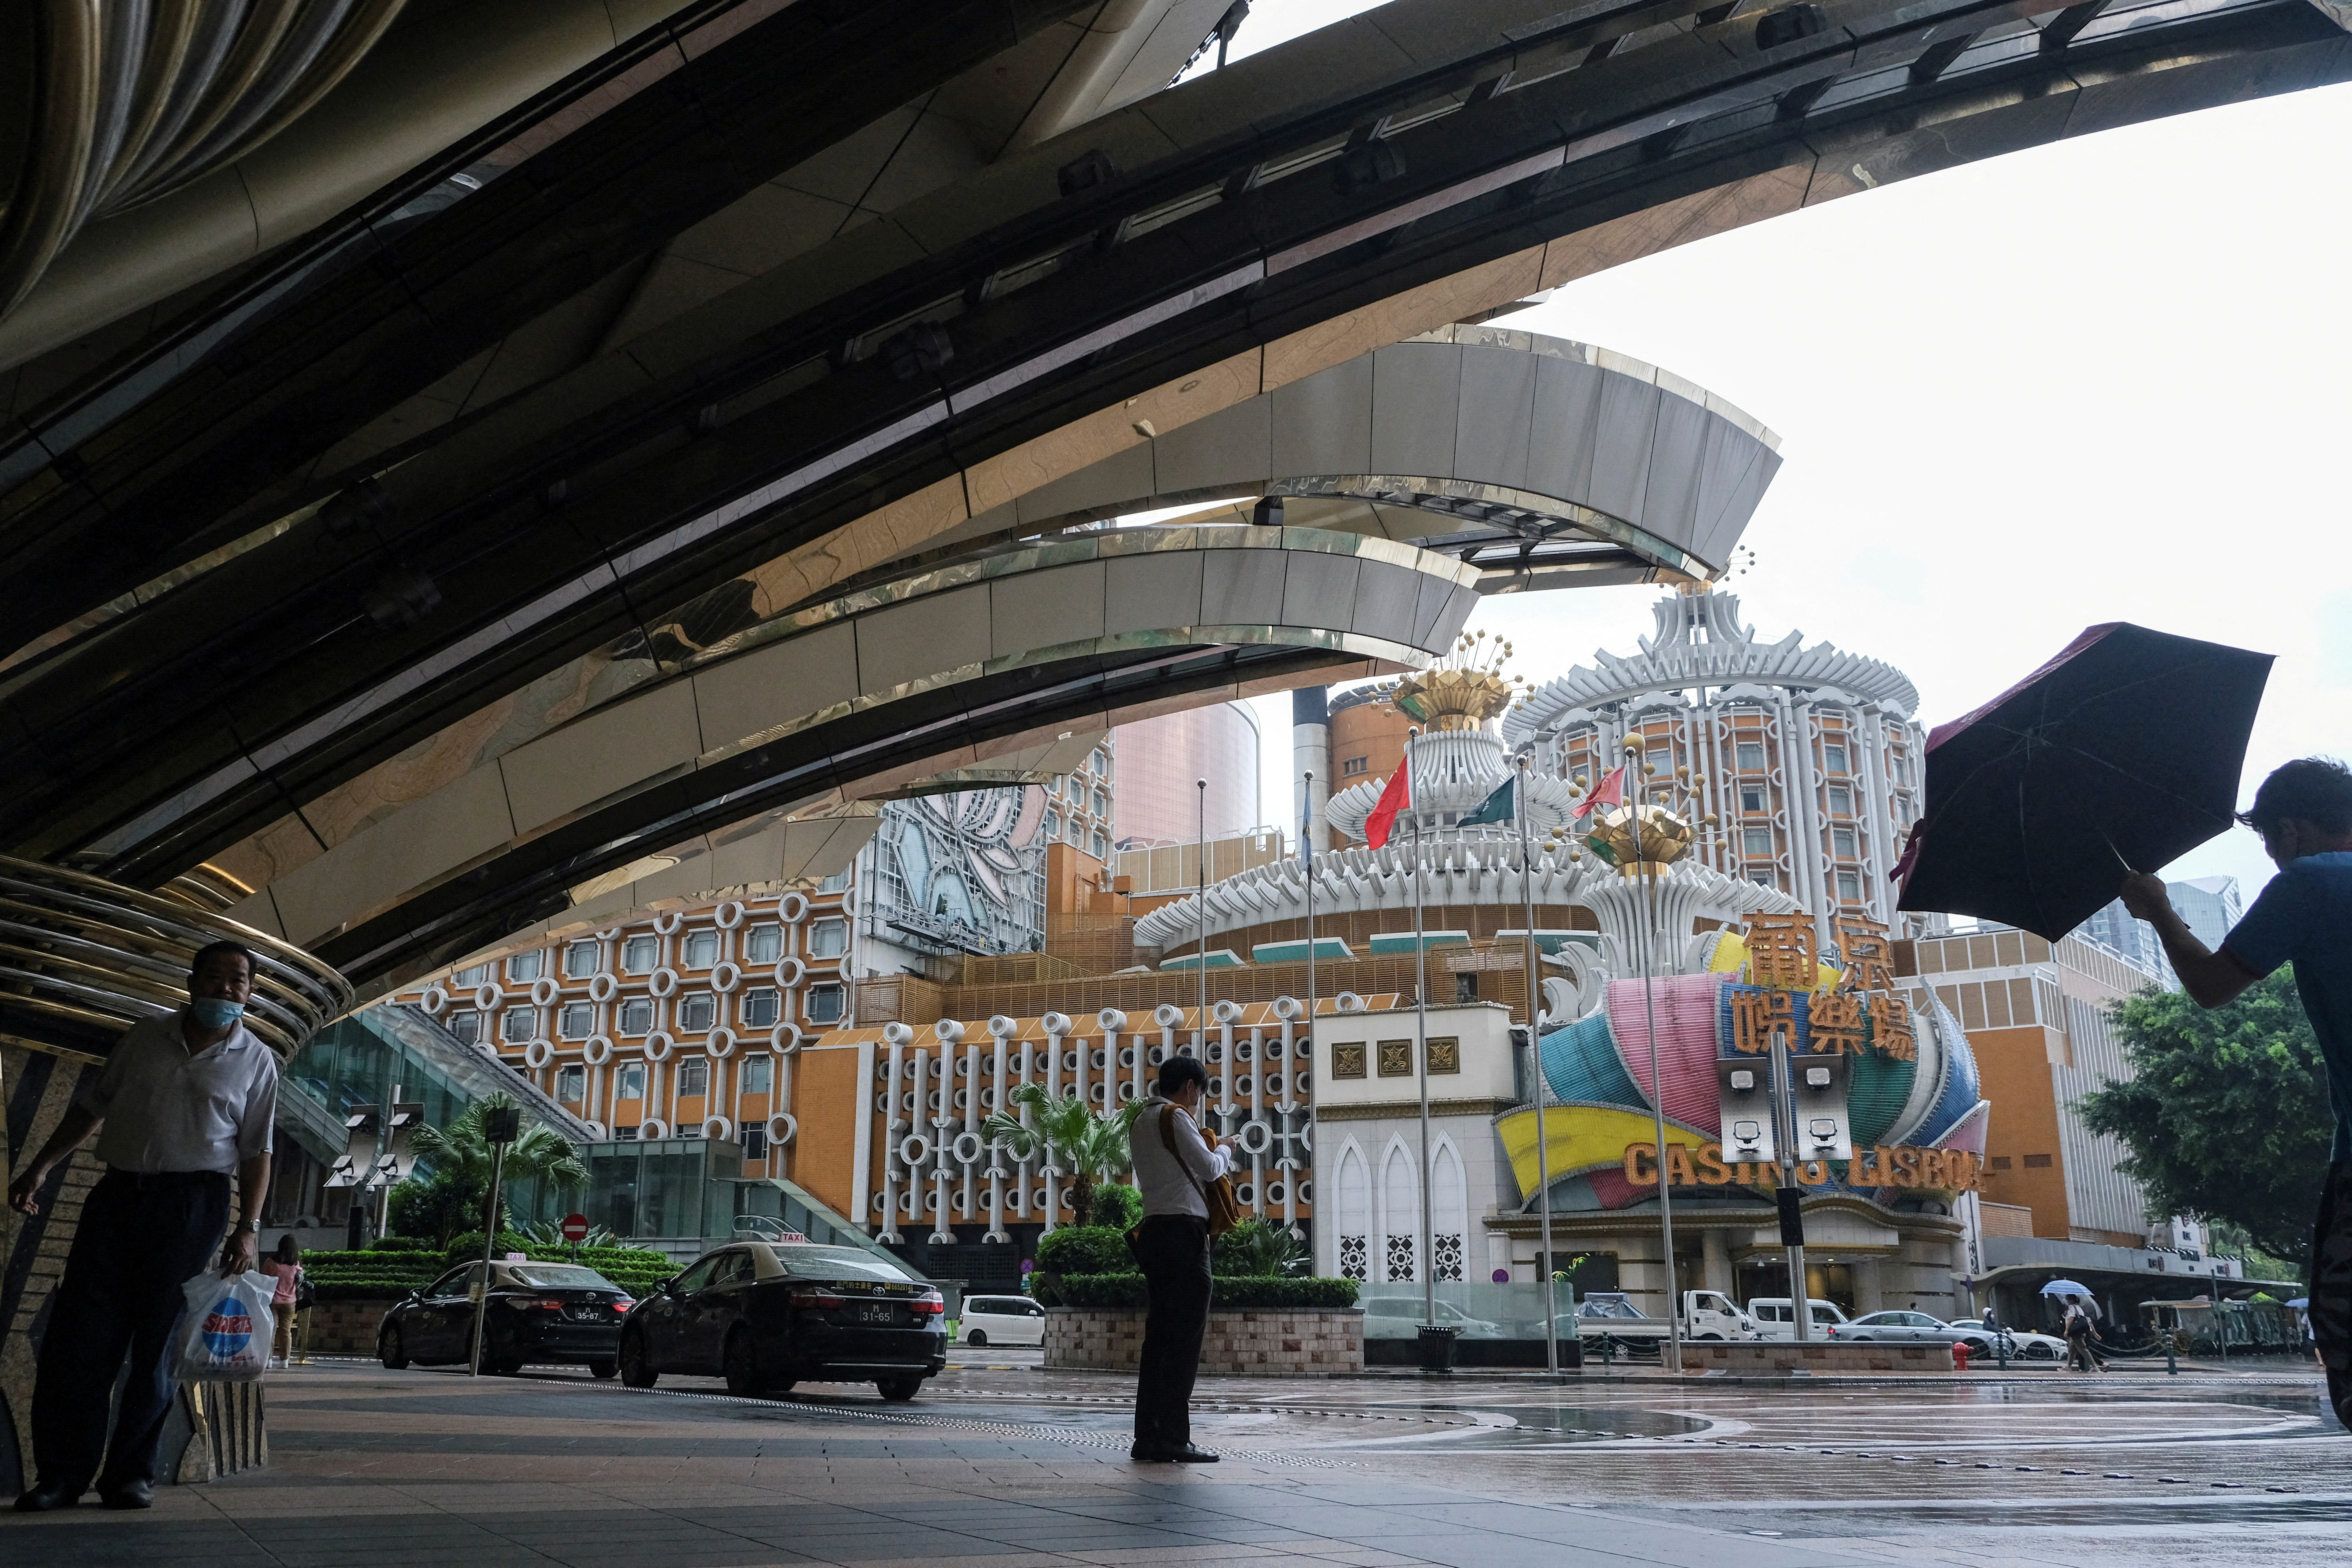 Christian Louboutin opens in Macau - Inside Retail Asia